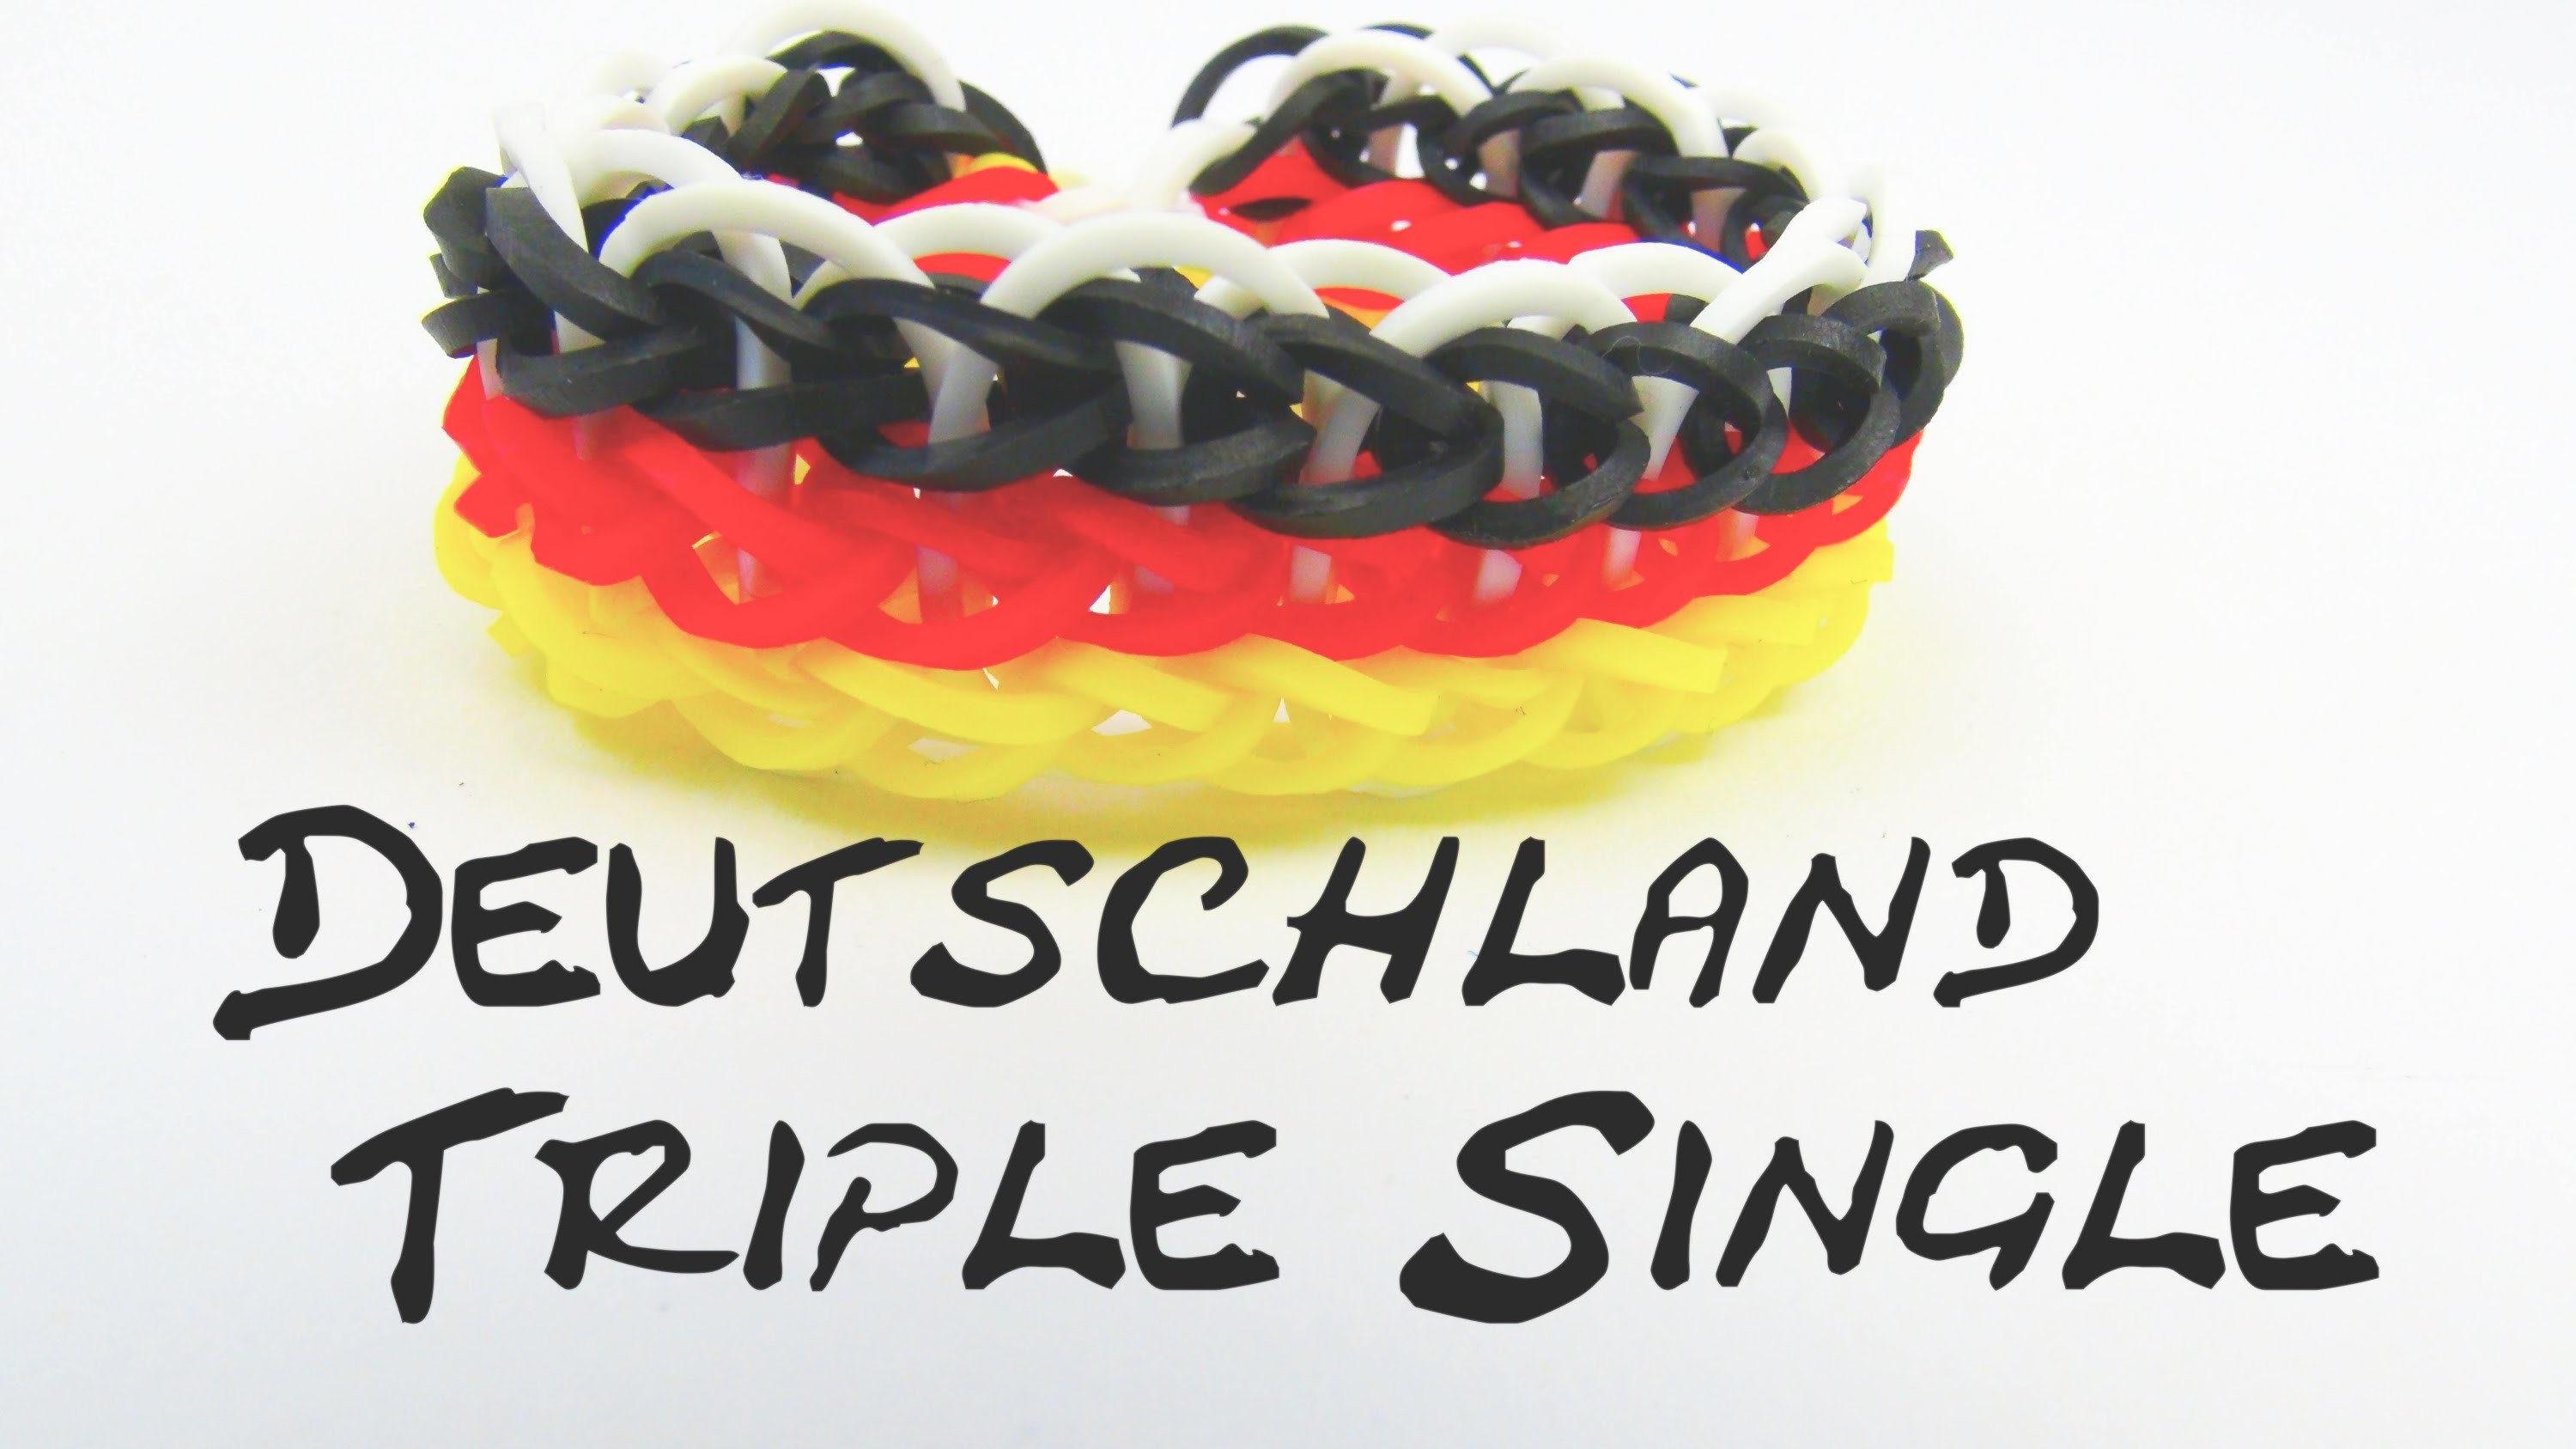 Loom Bands Triple Single Rainbow Loom Deutschland Farben Armband. Bracelet Tutorial | deutsch